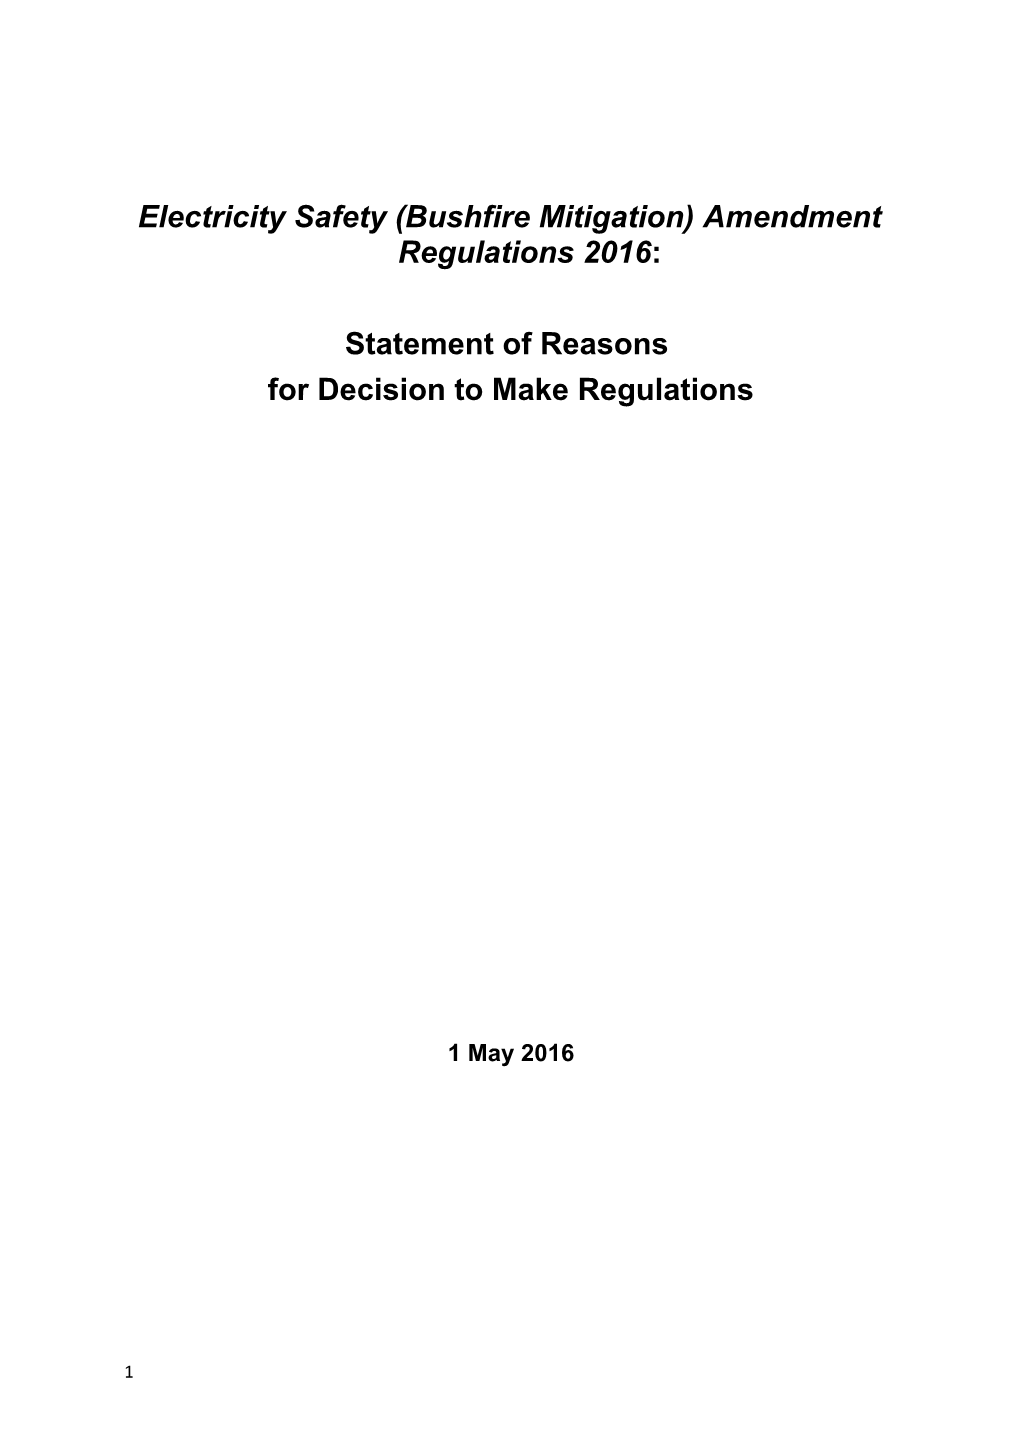 Electricity Safety (Bushfire Mitigation) Amendment Regulations 2016